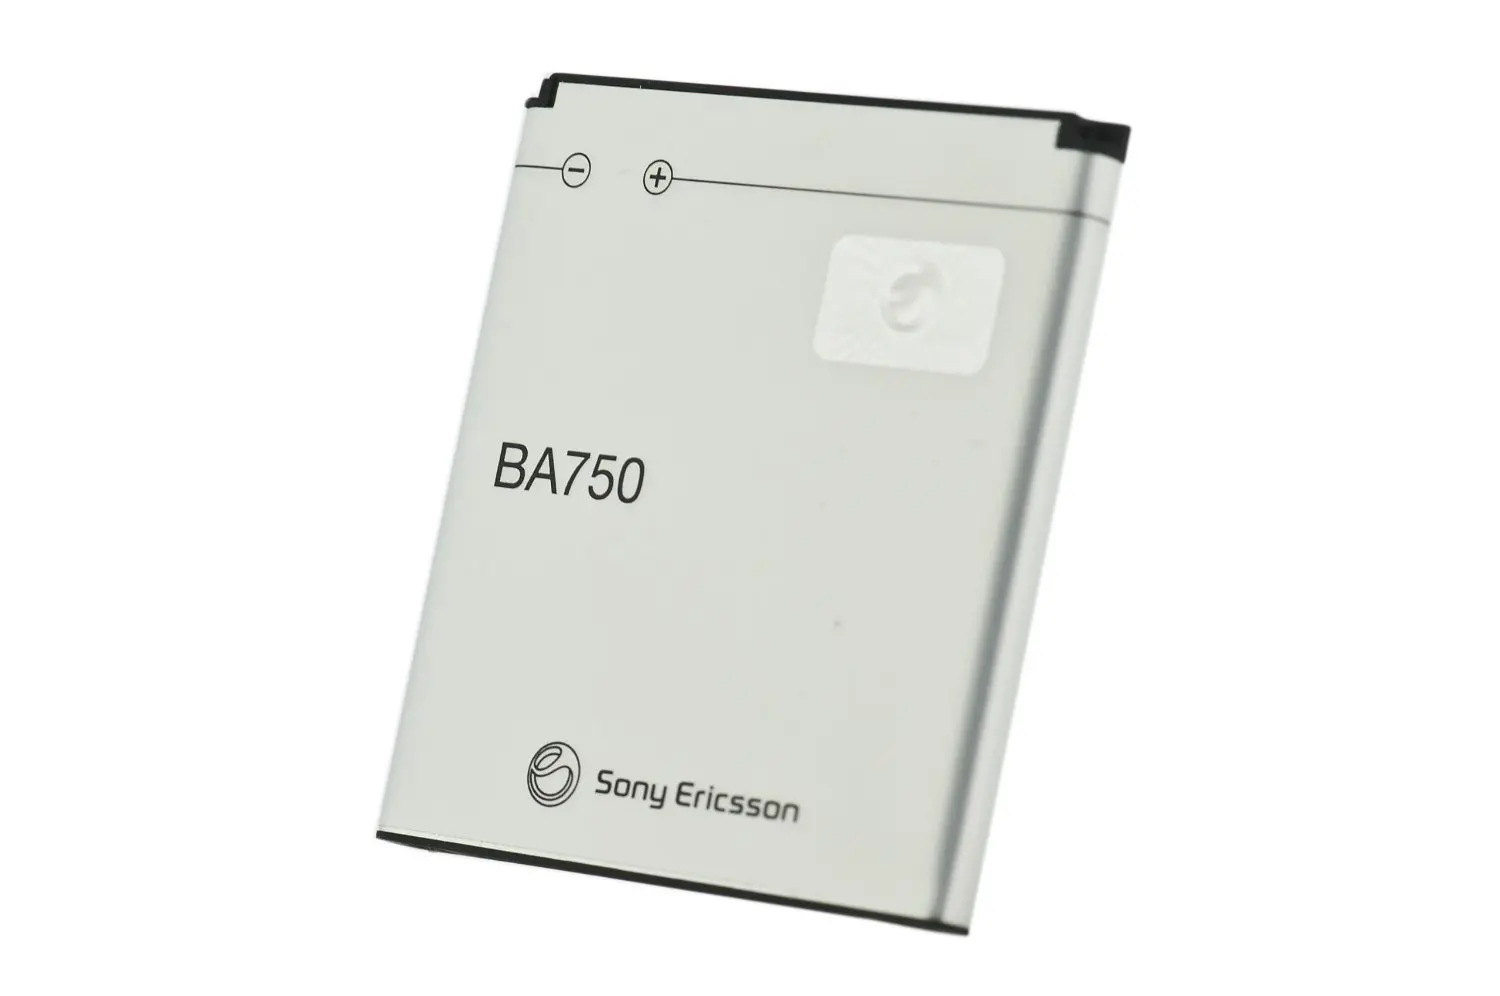 Sony xperia батарея. АКБ для телефона Sony Ericsson ba750 Xperia lt15i, lt18i. Аккумулятор для телефона Xperia Sony h4413. Аккумулятор для Sony Xperia p lt22. АКБ Sony Ericsson ba750 совместимость.